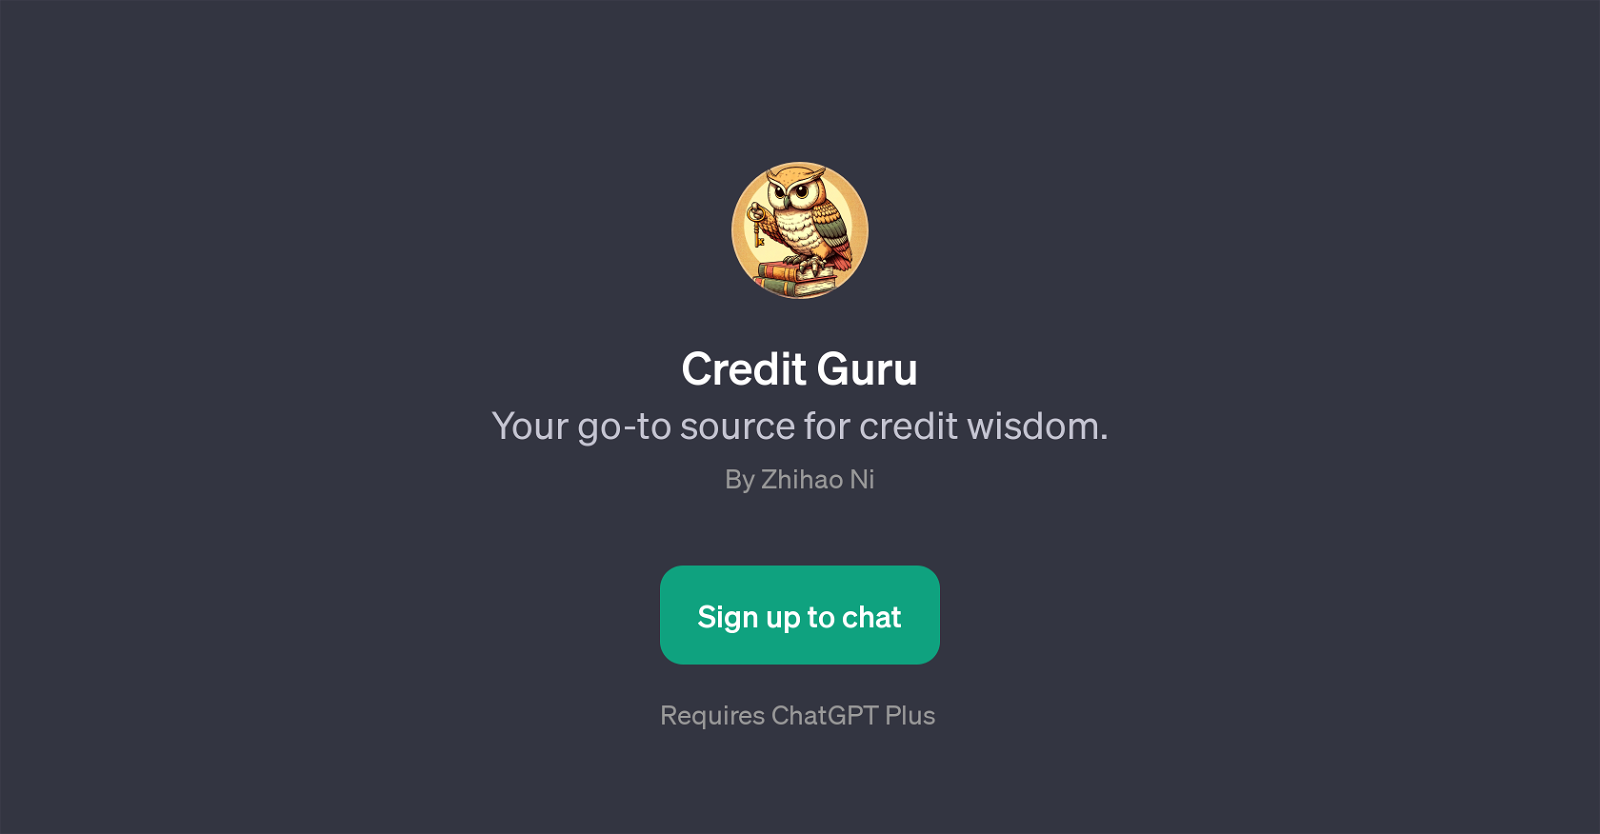 Credit Guru website